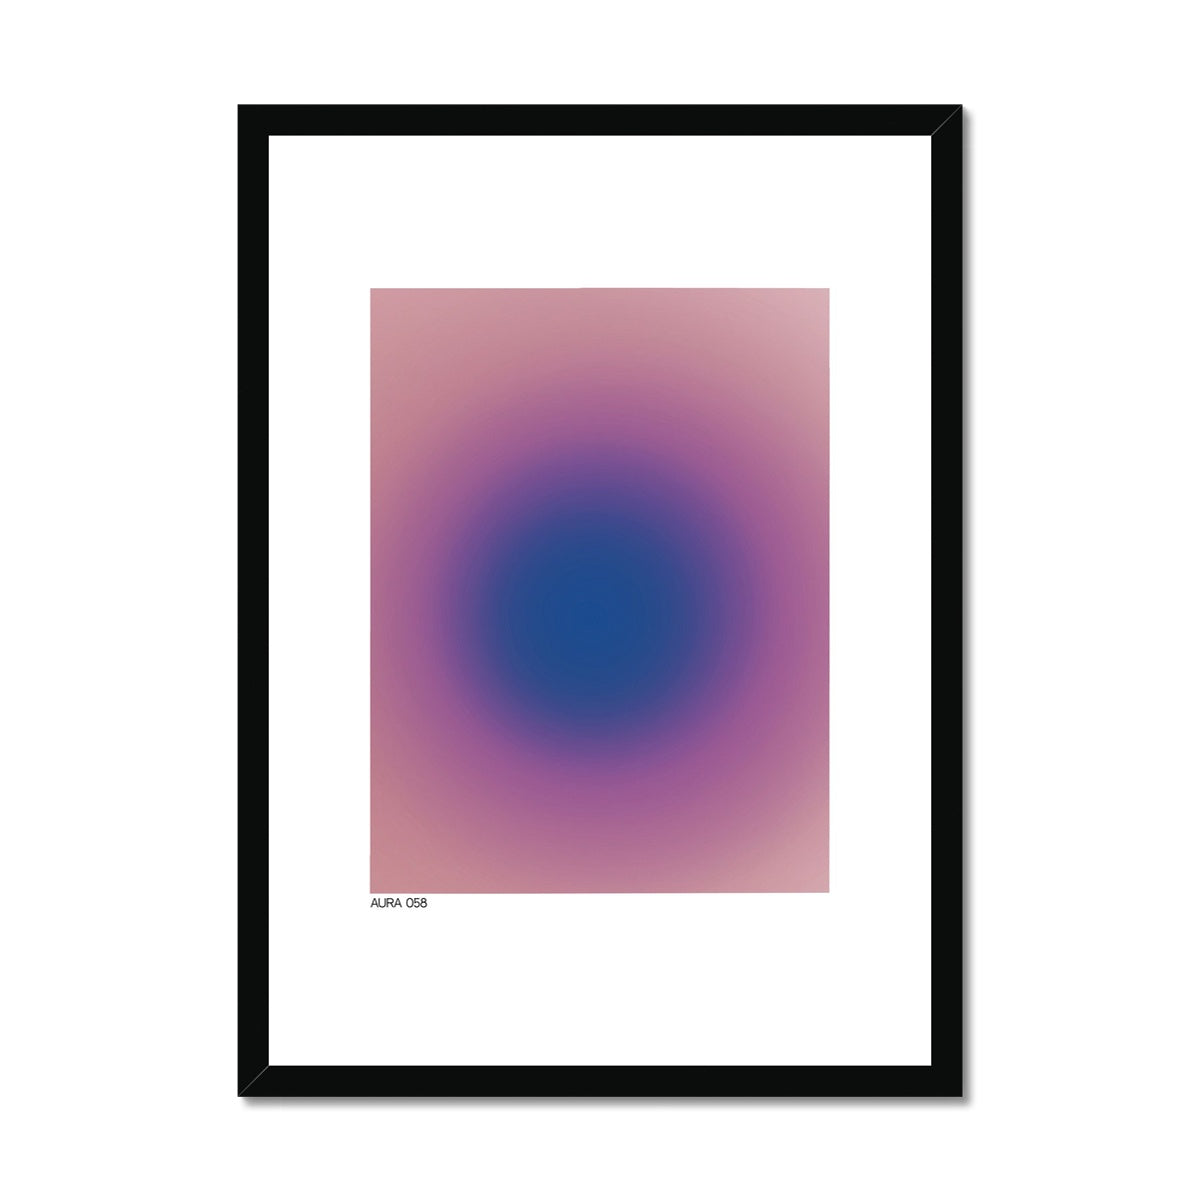 aura 058 Framed & Mounted Print